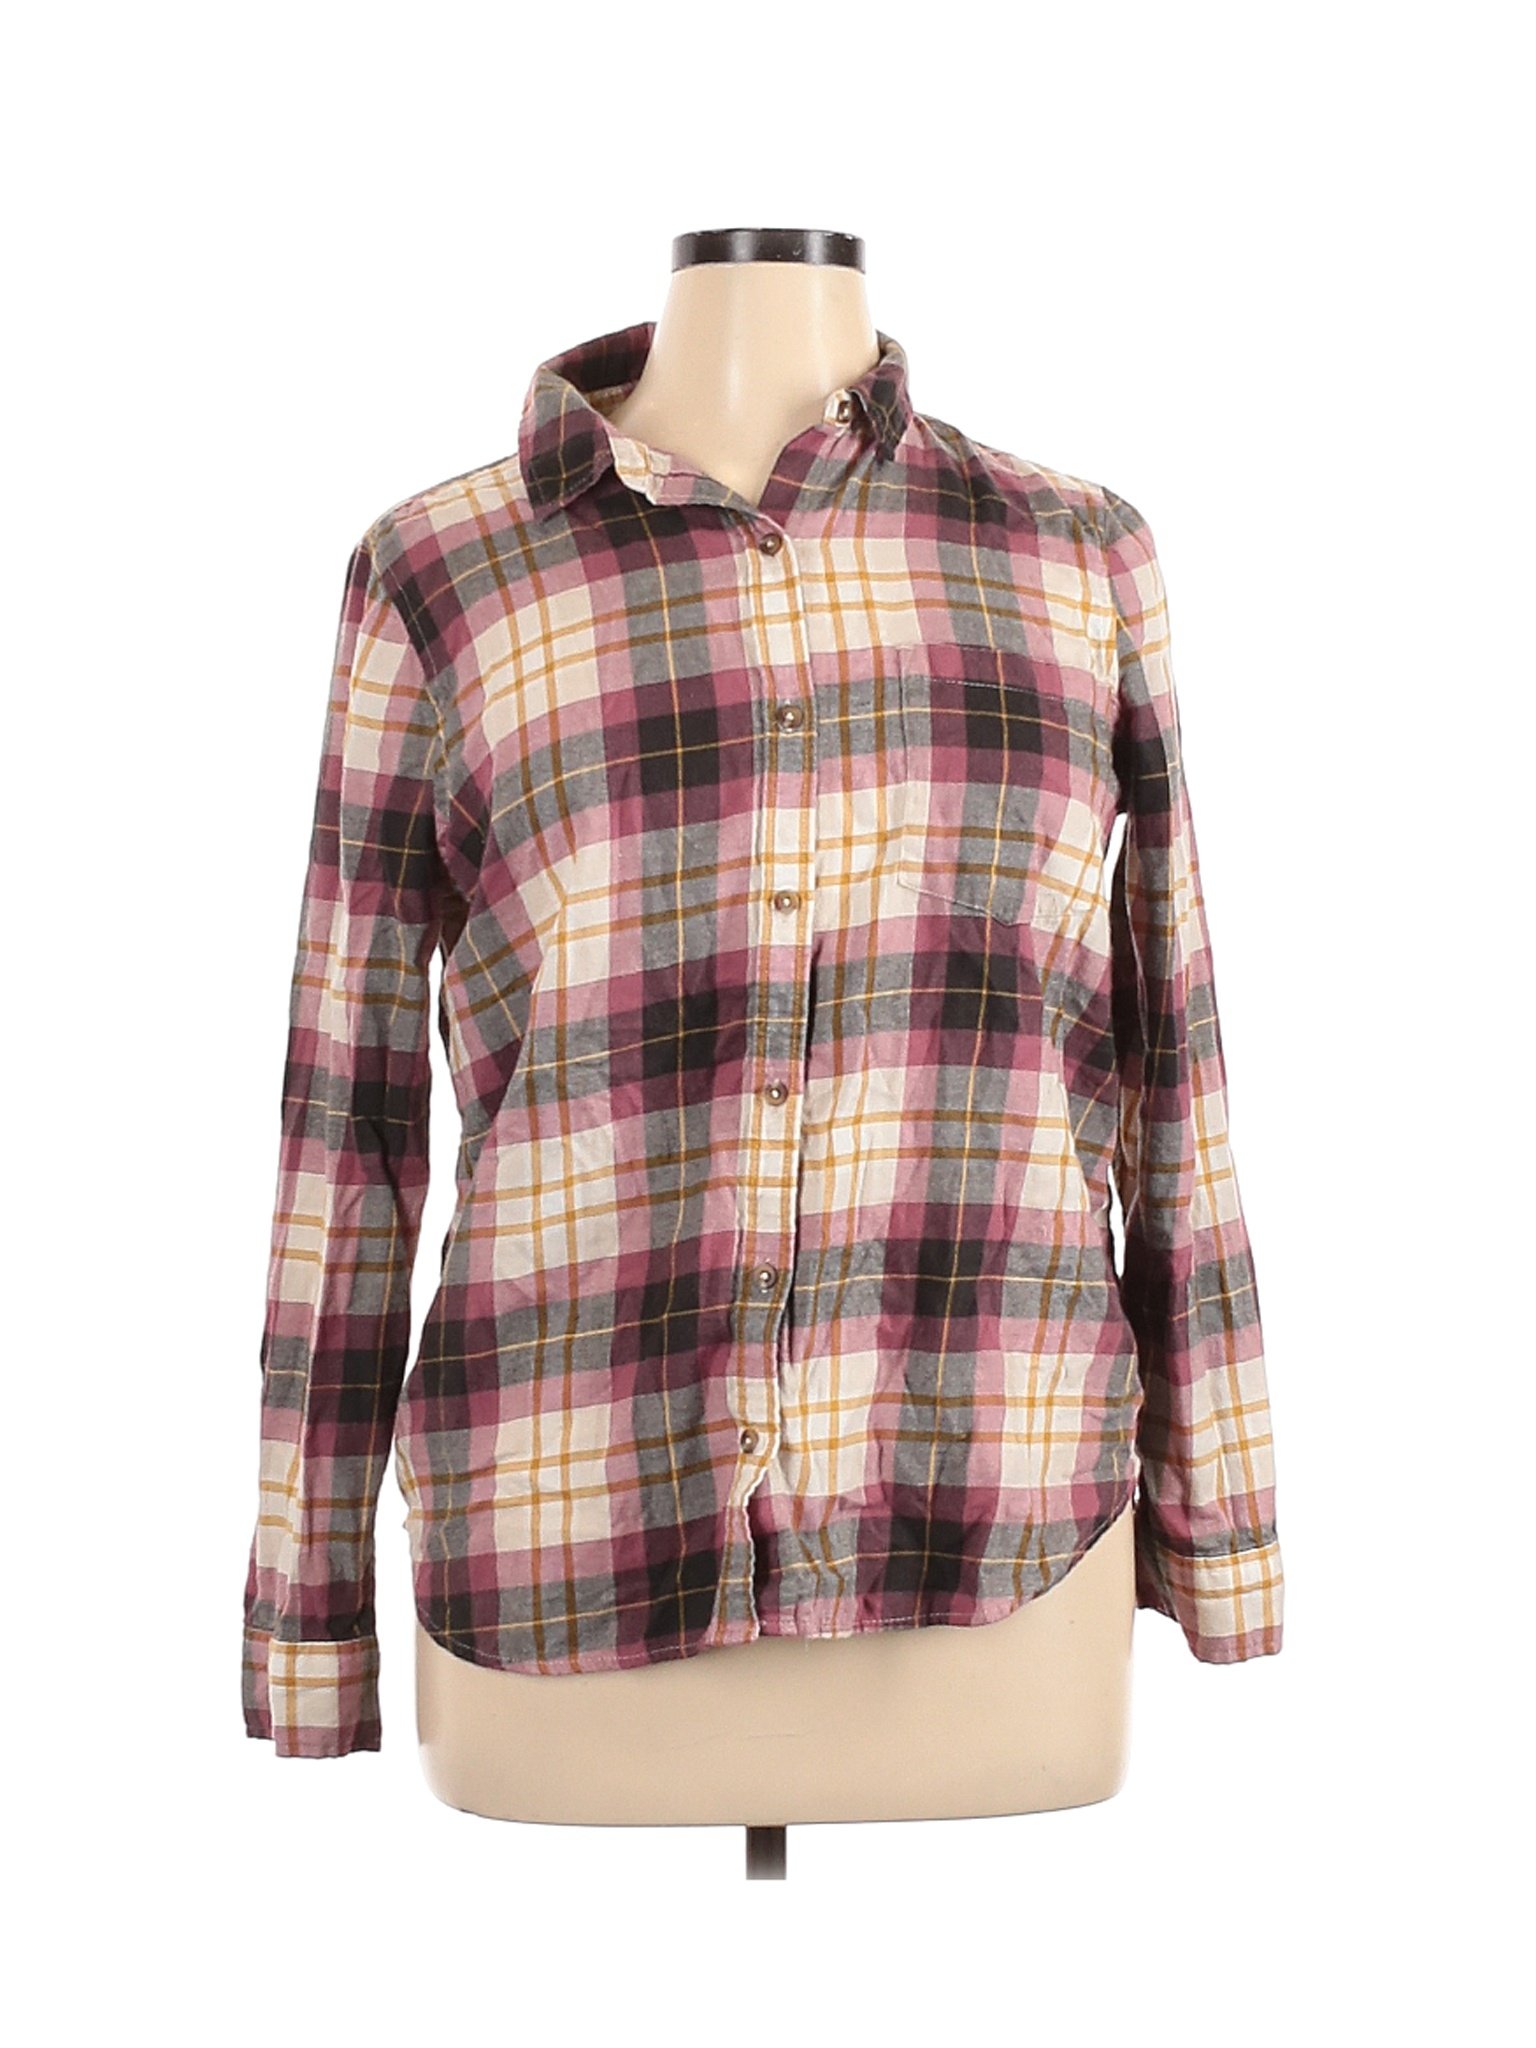 SO Women Pink Long Sleeve Button-Down Shirt XL | eBay